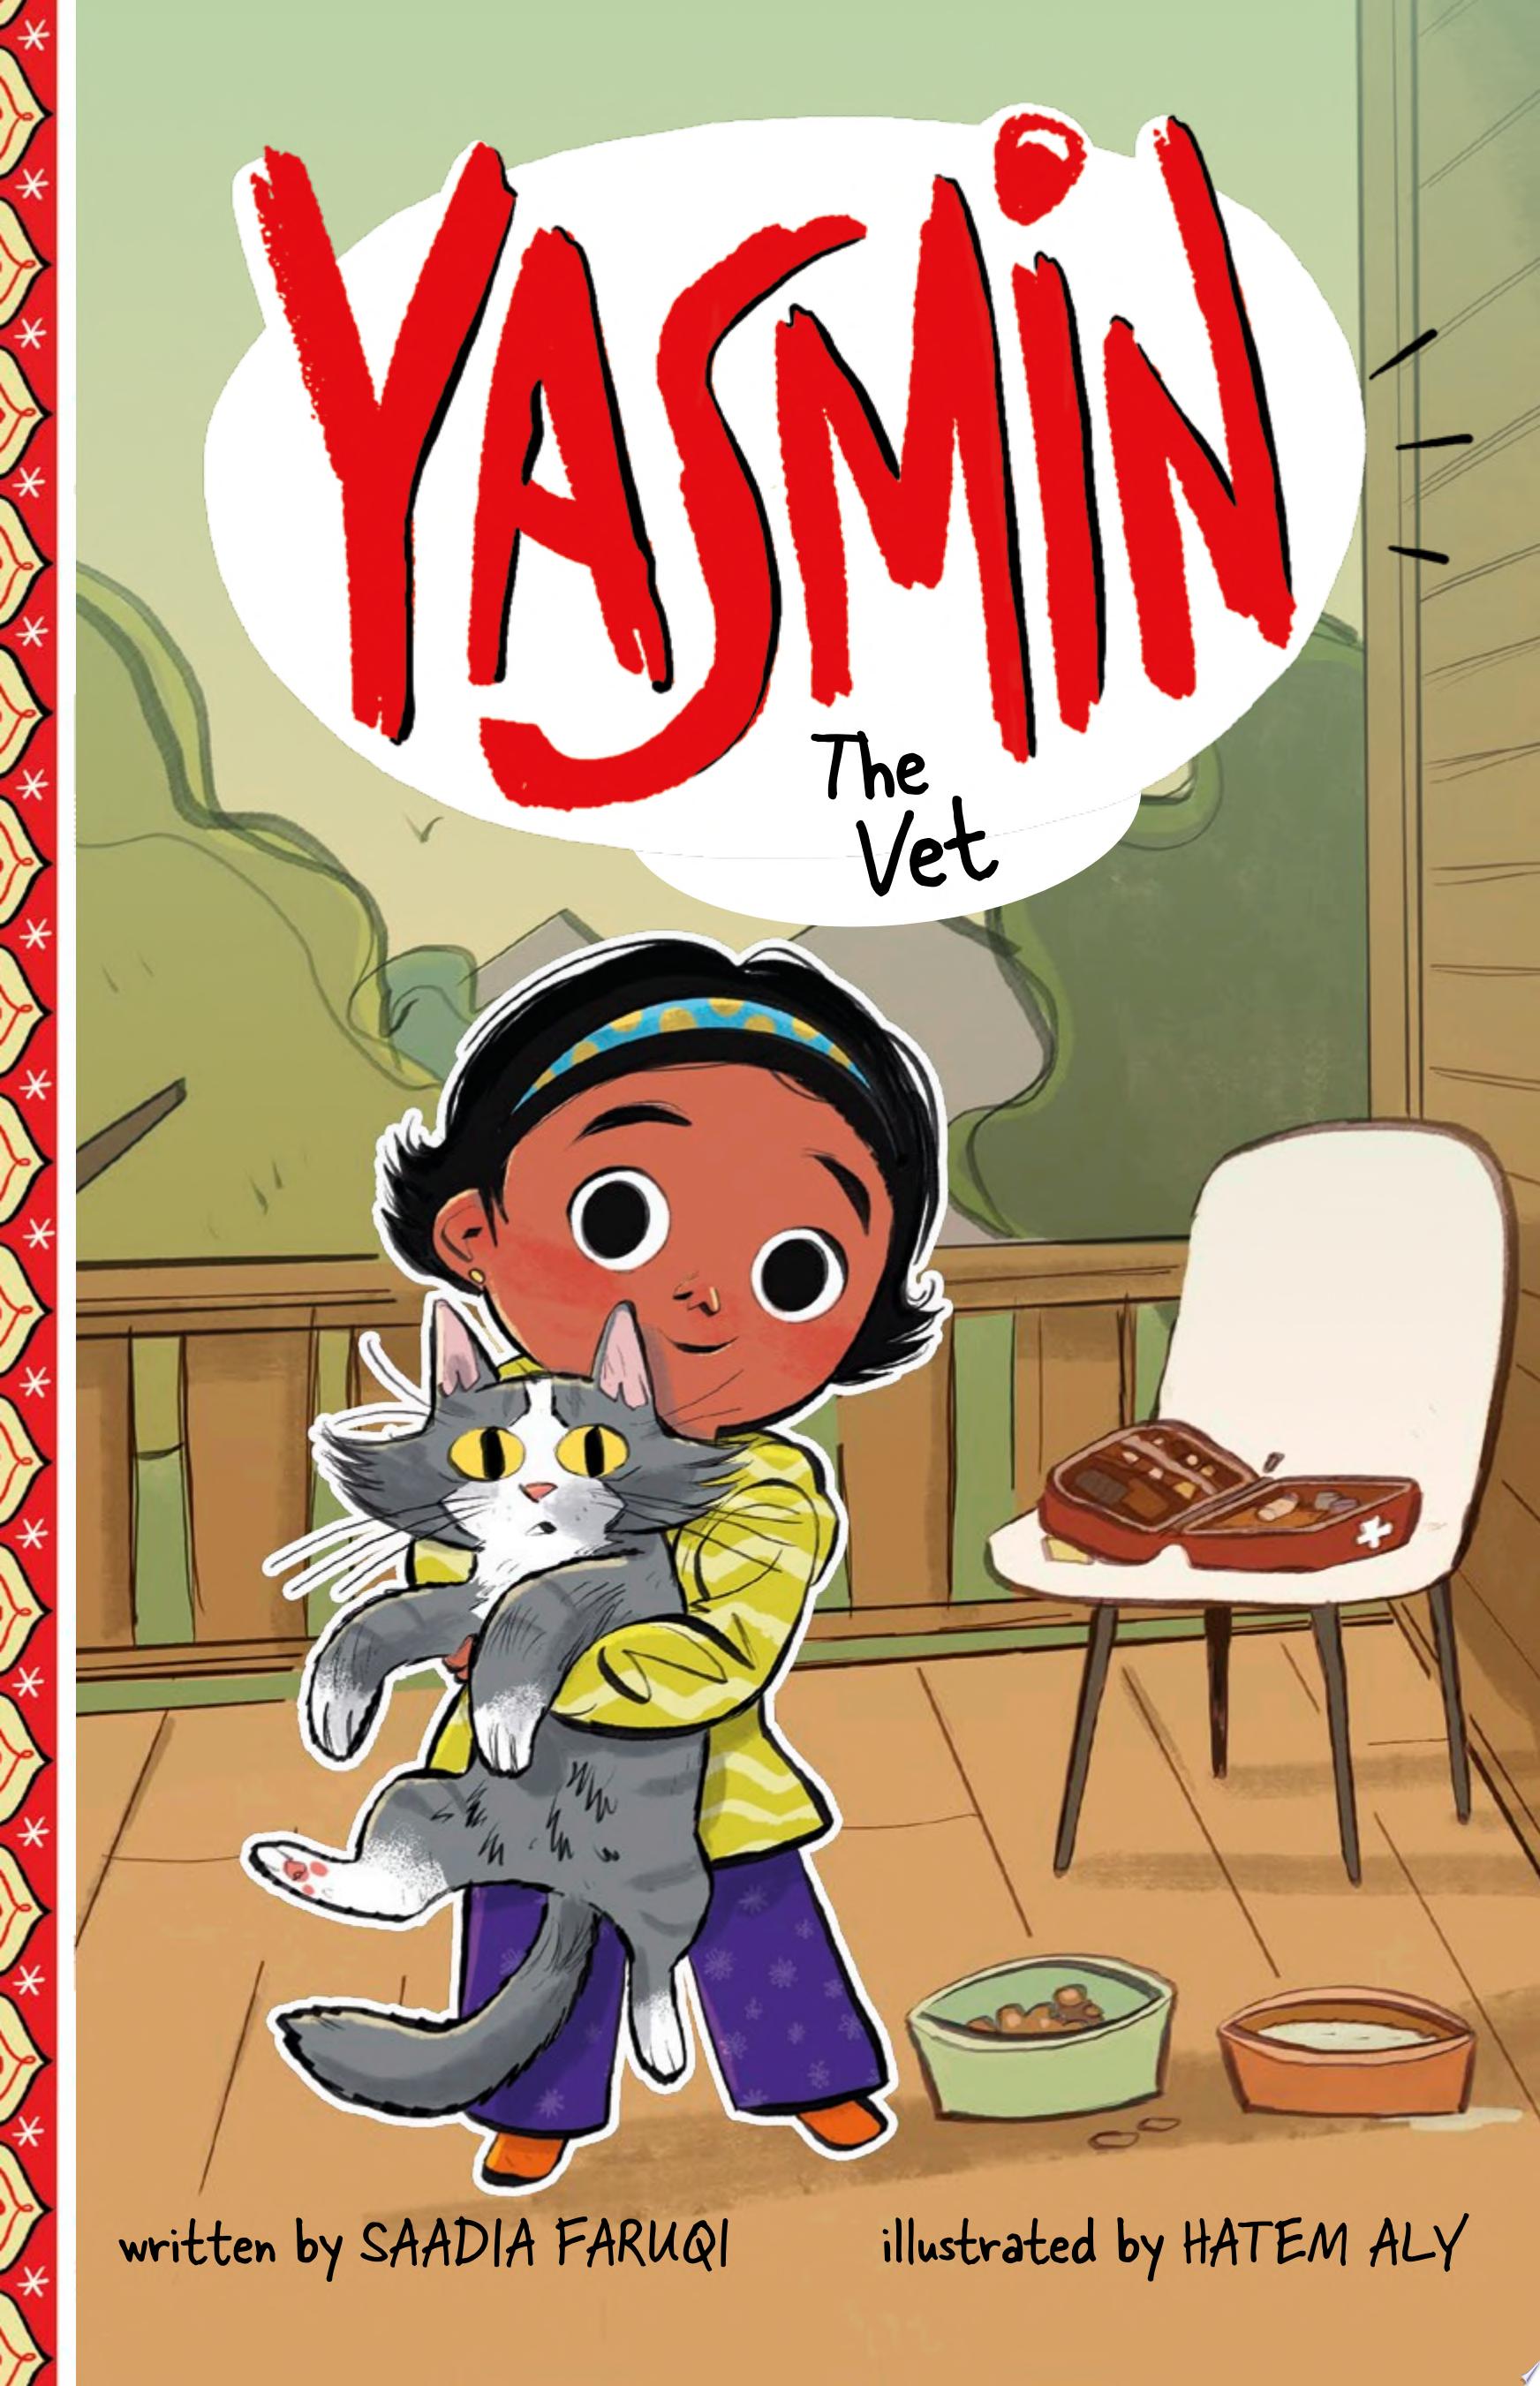 Image for "Yasmin the Vet"